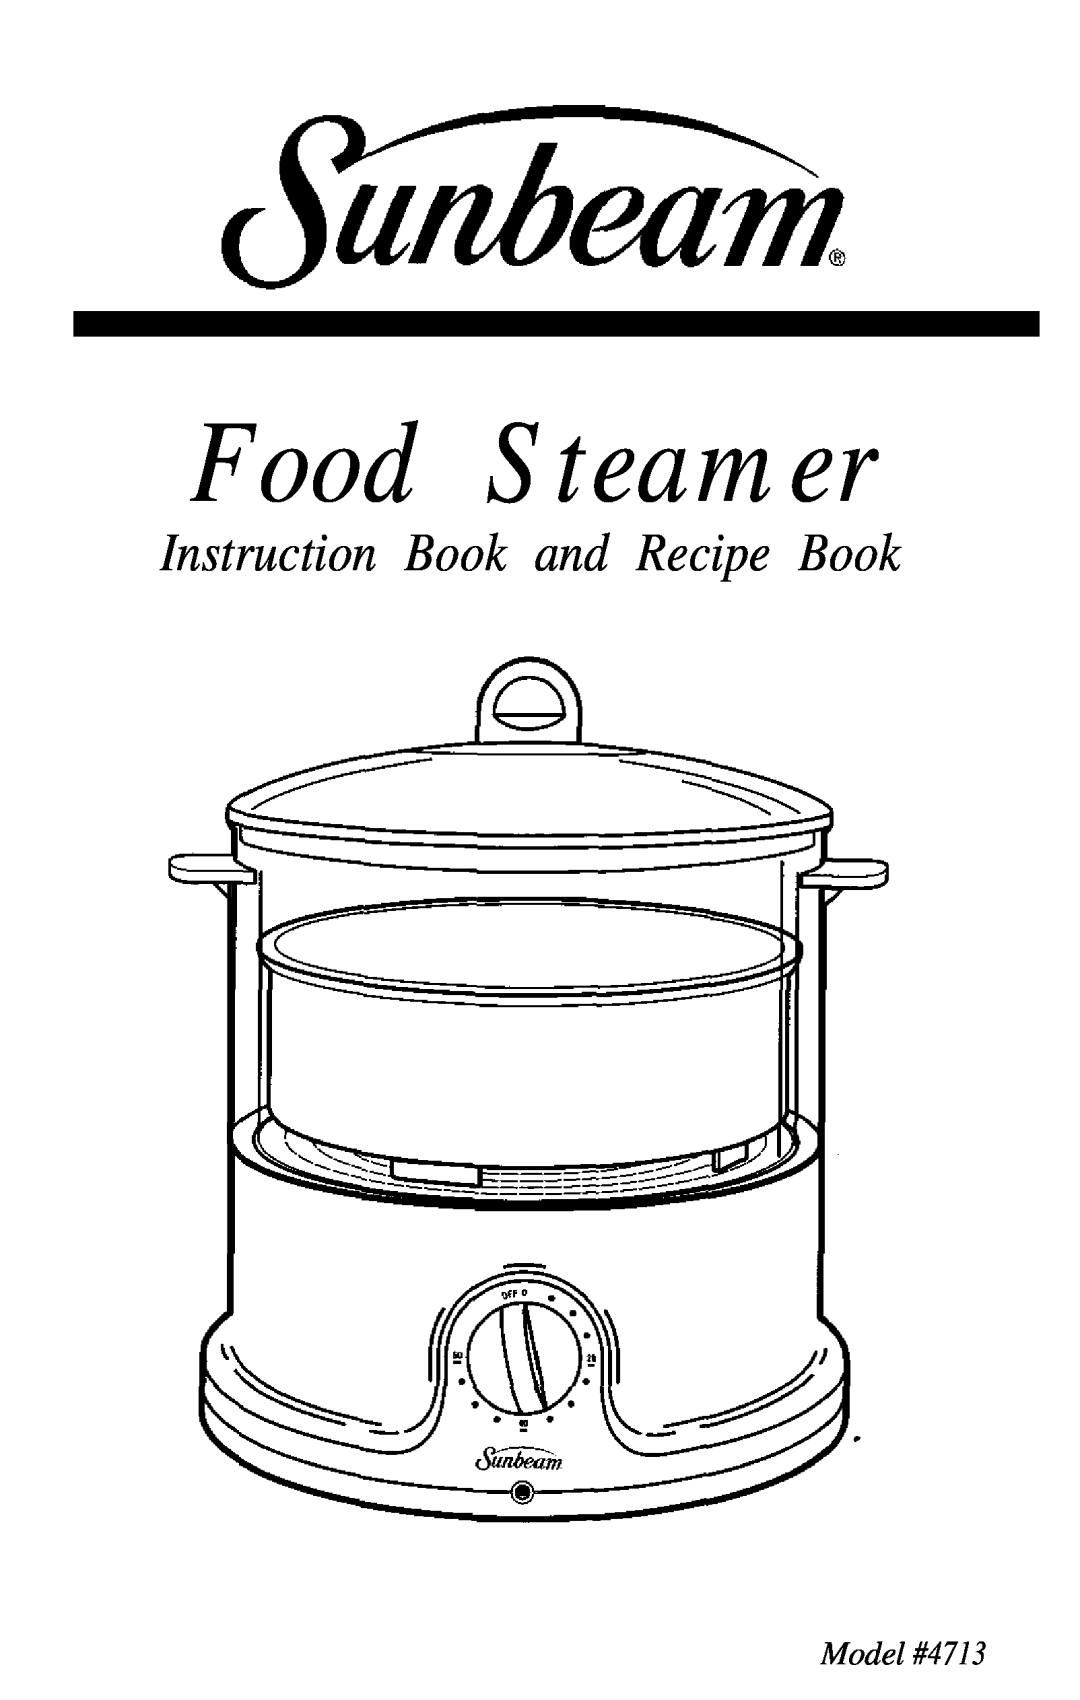 Sunbeam manual Food Steamer, Instruction Book and Recipe Book, Model #4713 